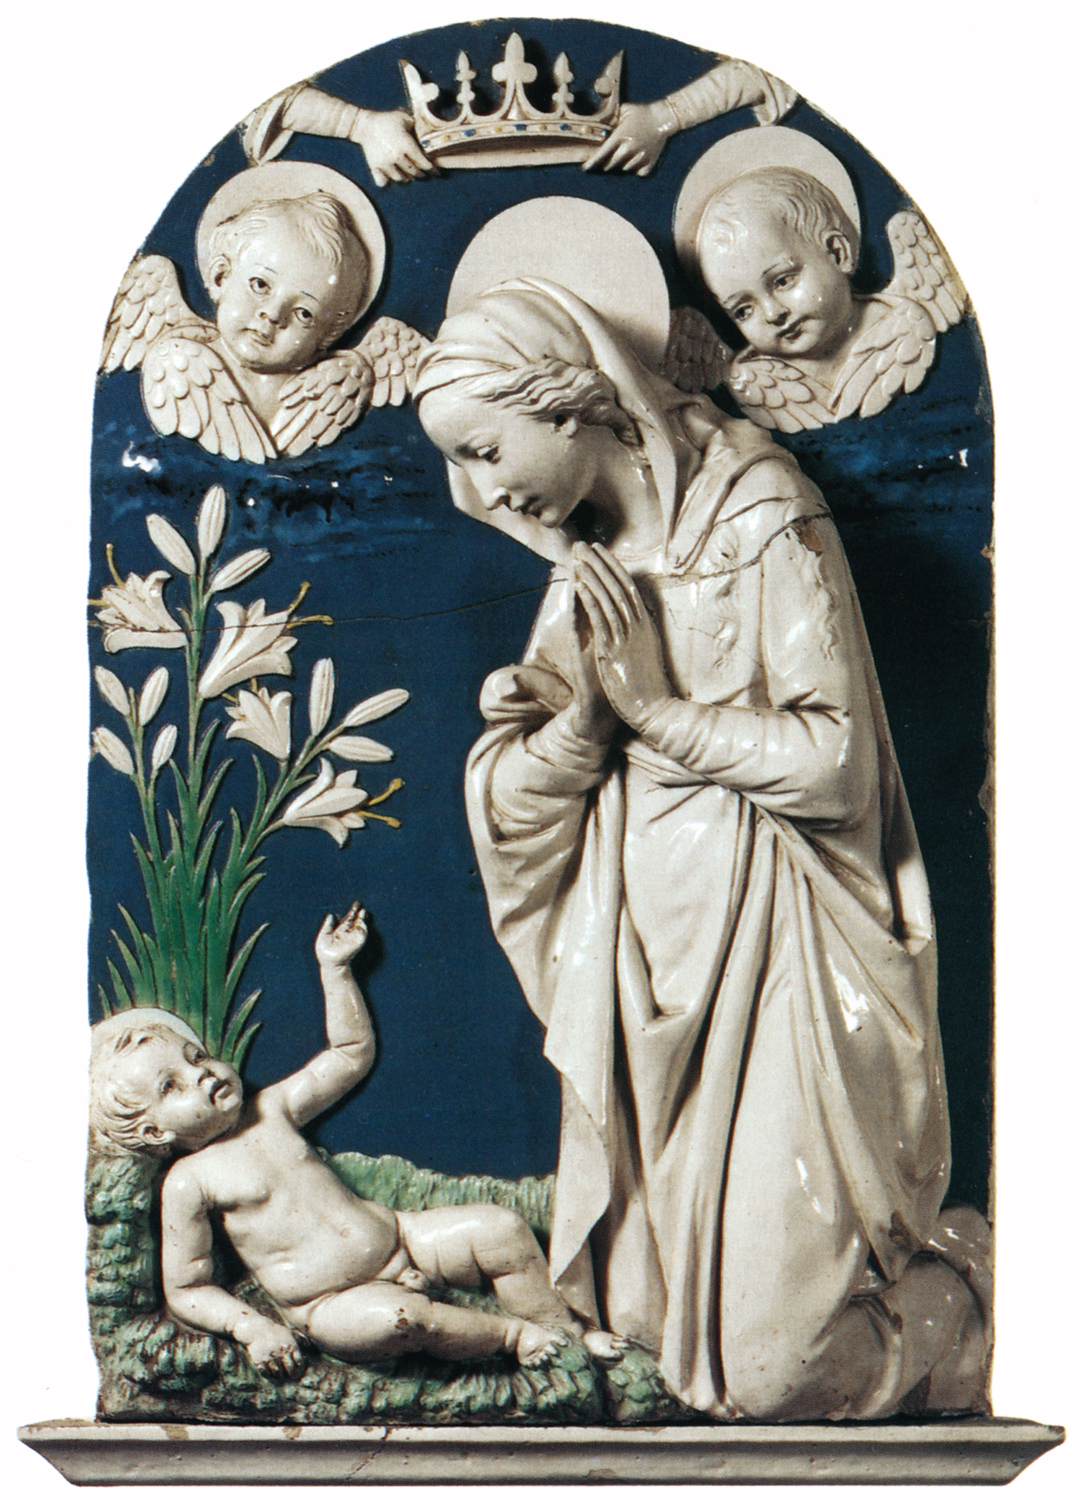 Adoration of the Child by Andre della Robbia